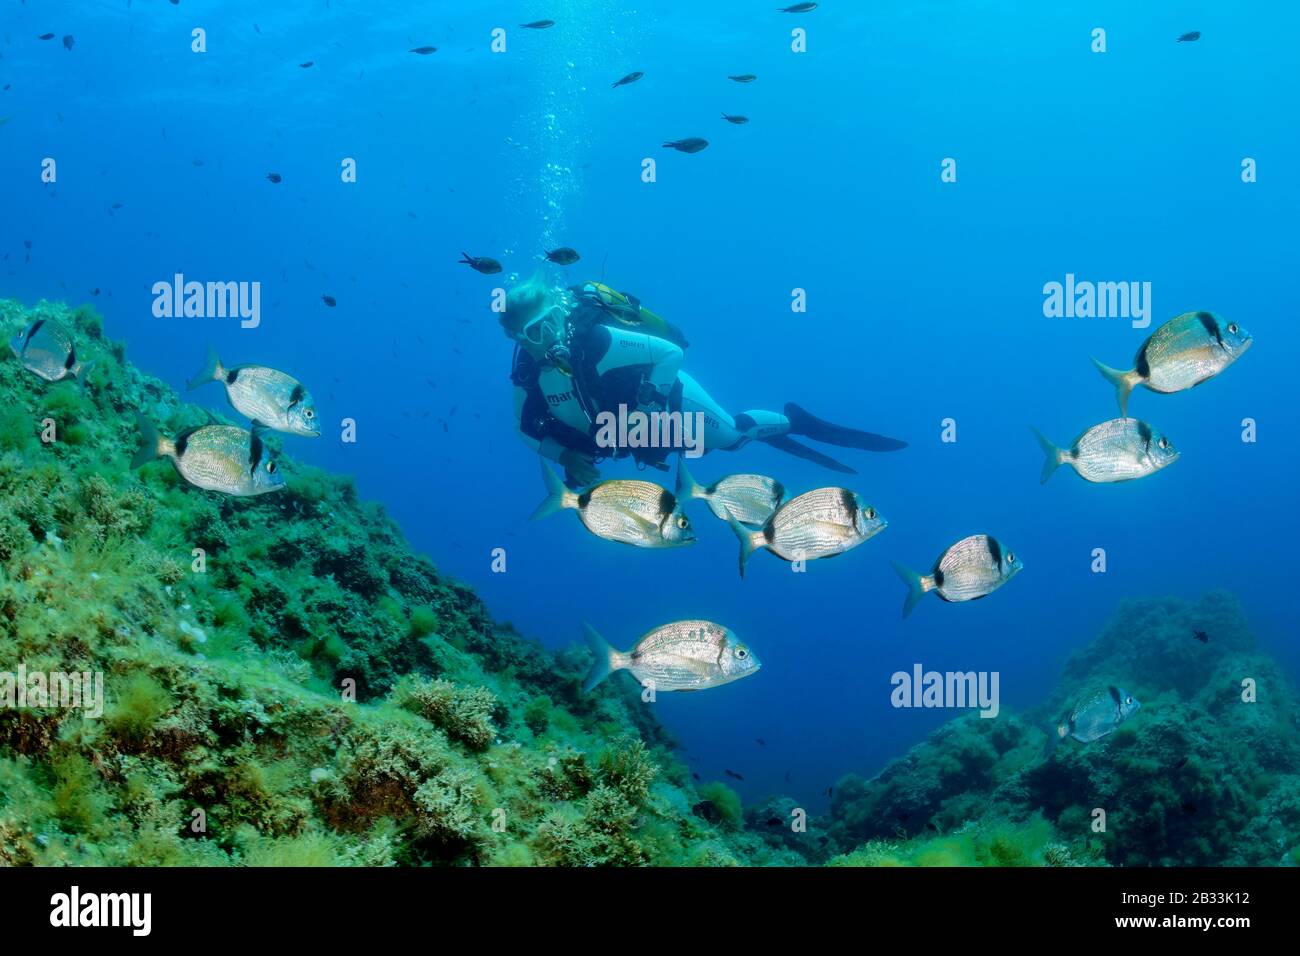 Common two banded sea bream, Diplodus vulgaris and scuba diver, Diplodus vulgaris, Tamariu, Costa Brava, Spain, Mediterranean Sea, MR Stock Photo